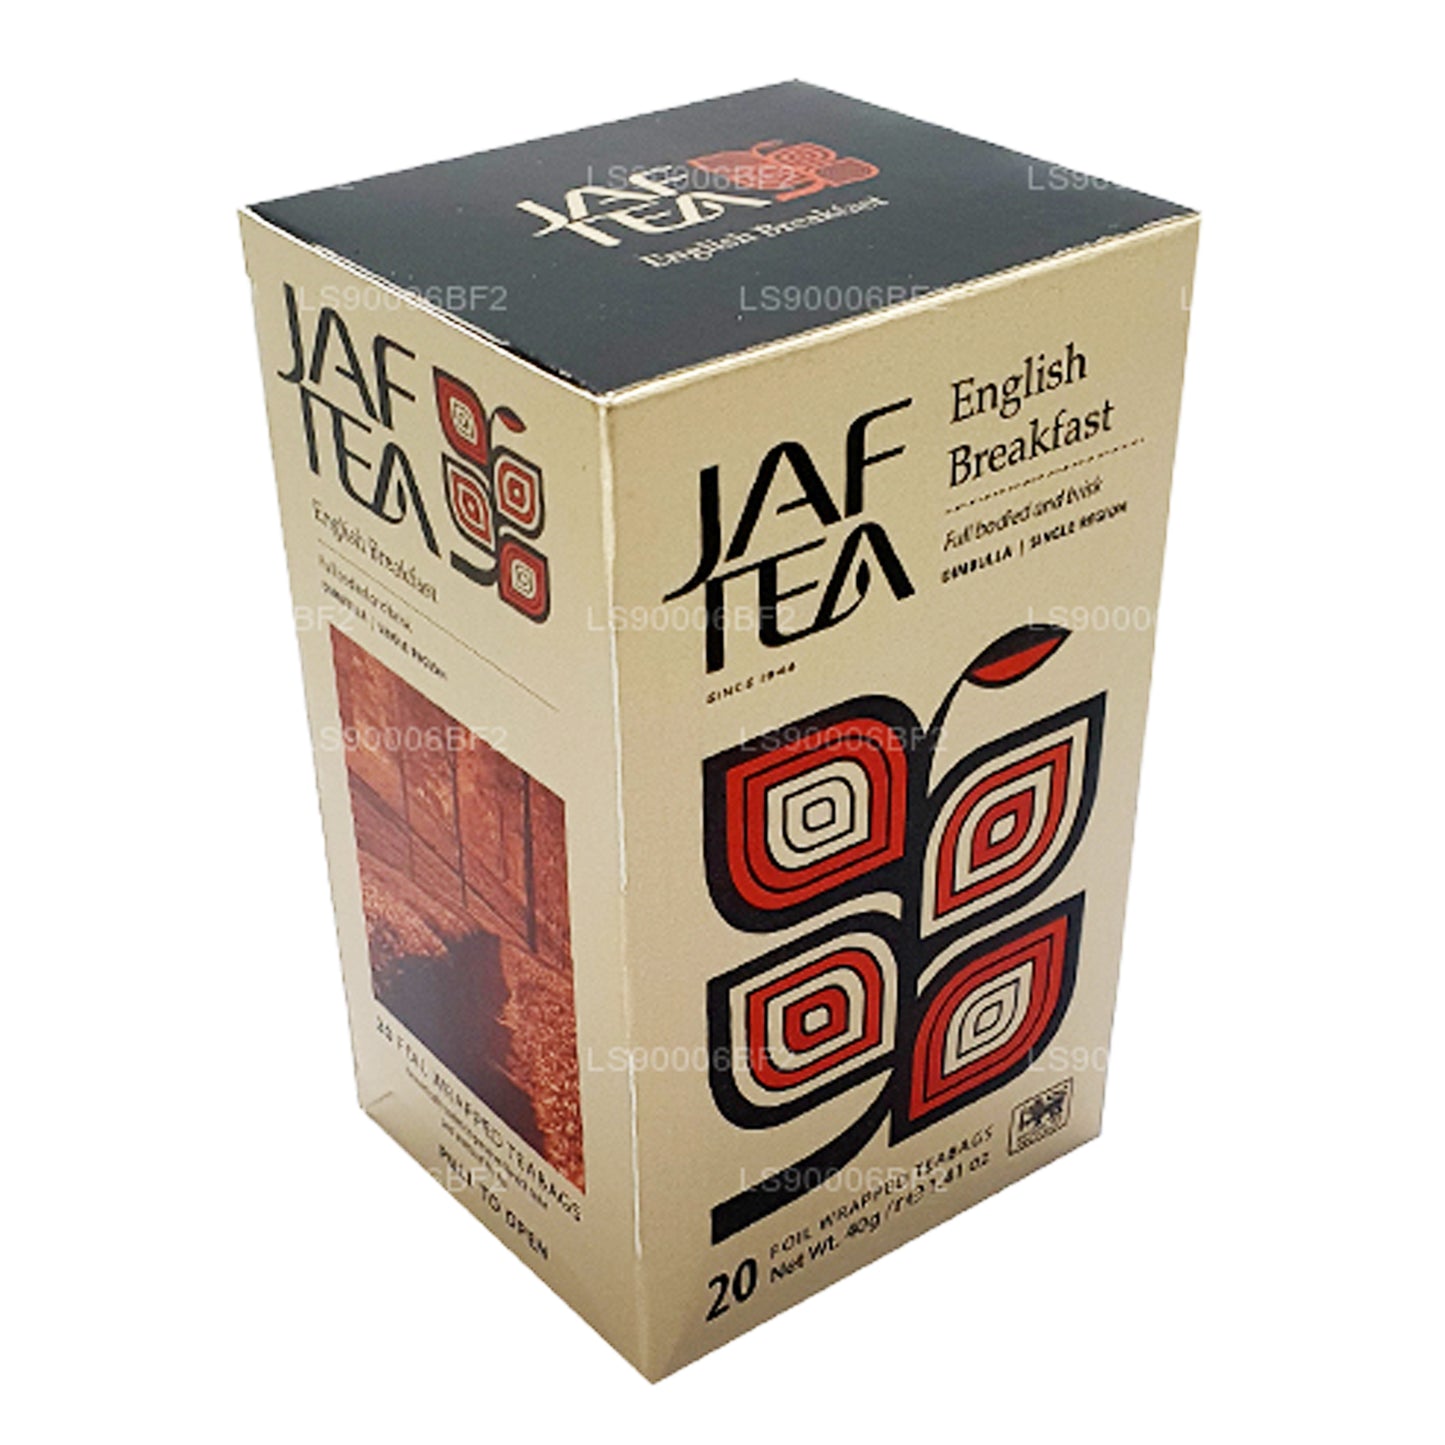 Jaf Tea 英式早餐 (40g) 20 茶包